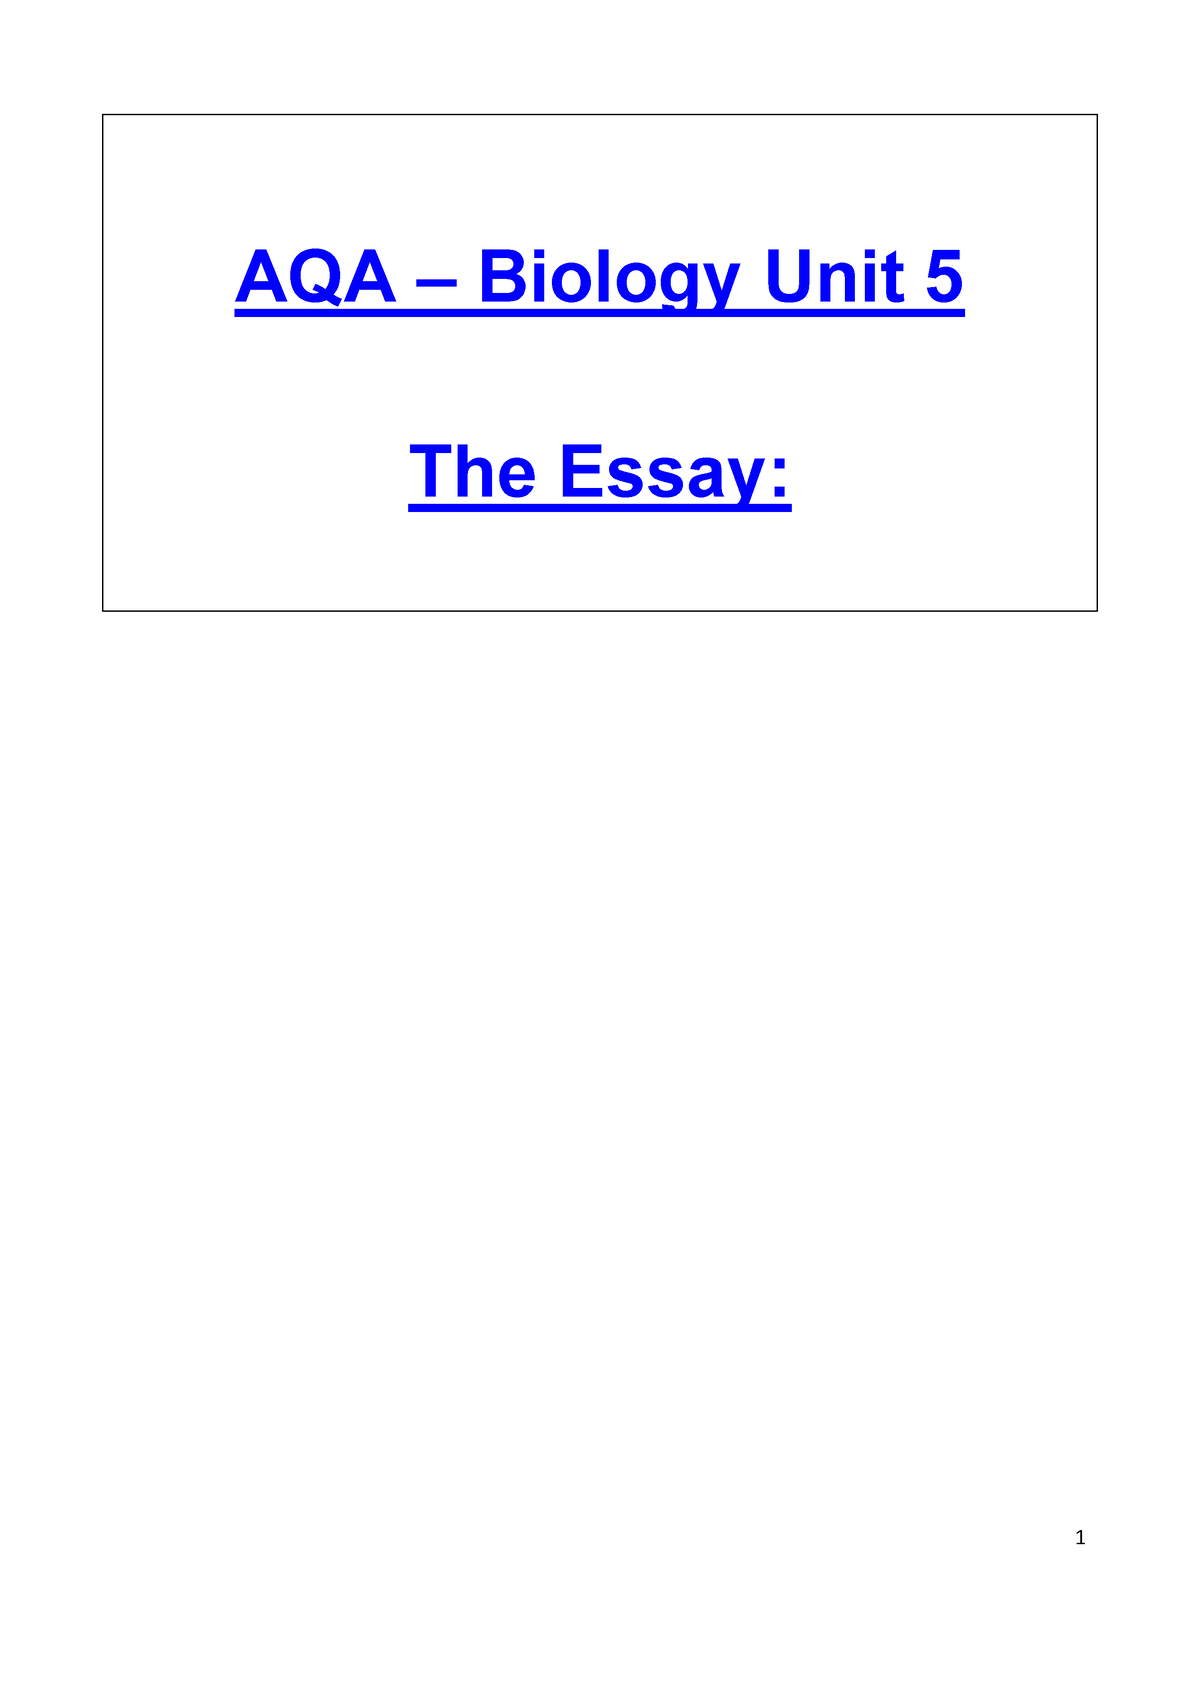 aqa biology synoptic essay examples